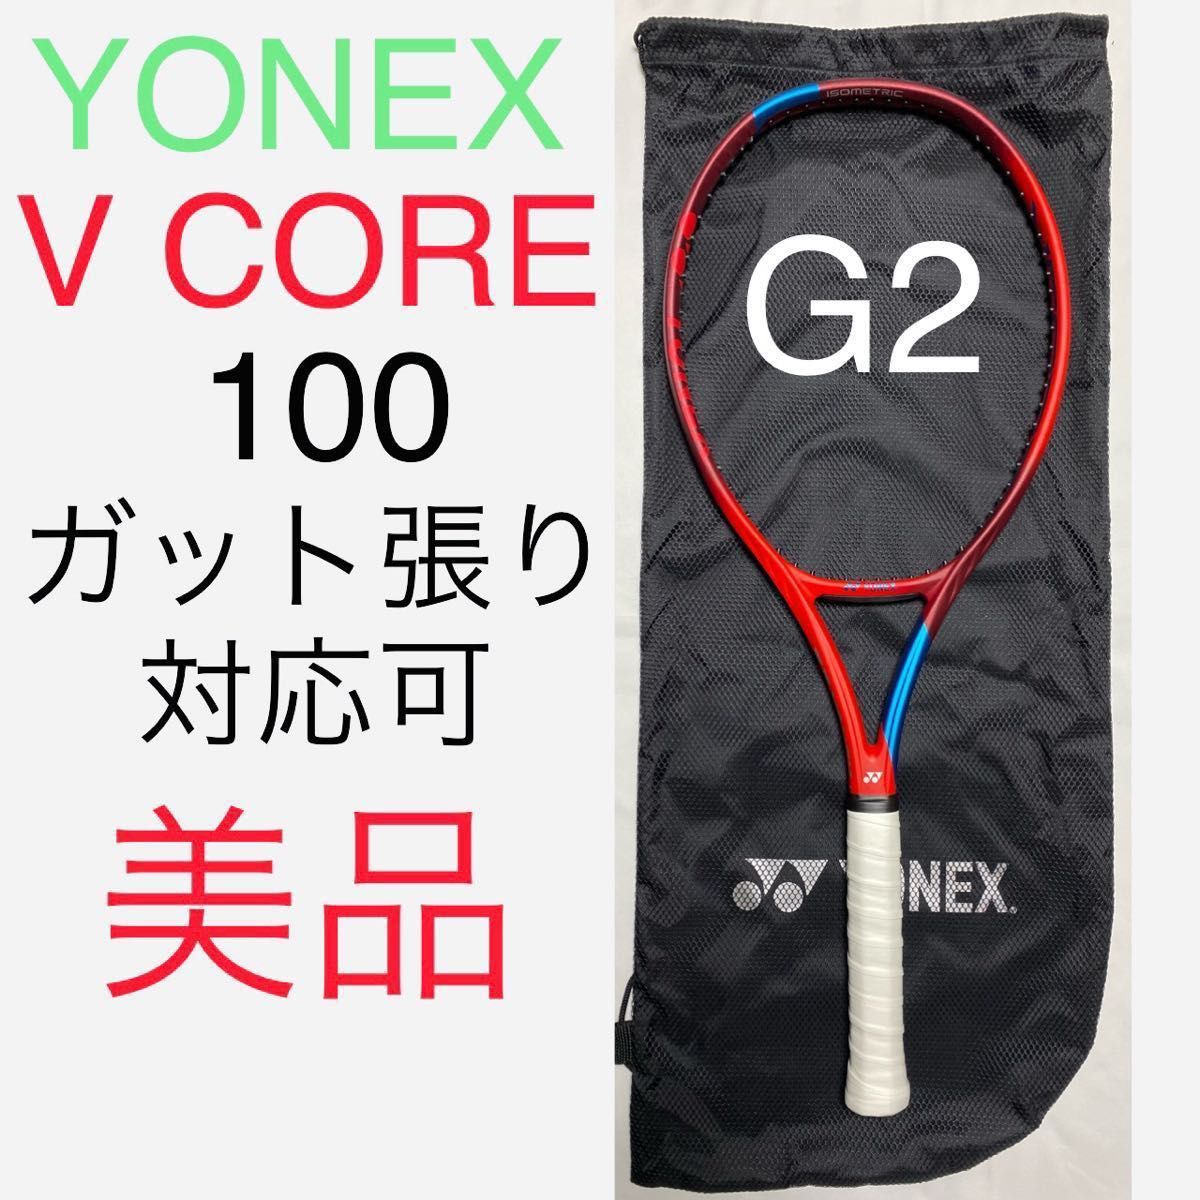 YONEX V CORE 100 G2 ヨネックス ブイコア 100 VCORE Vコア 硬式テニス